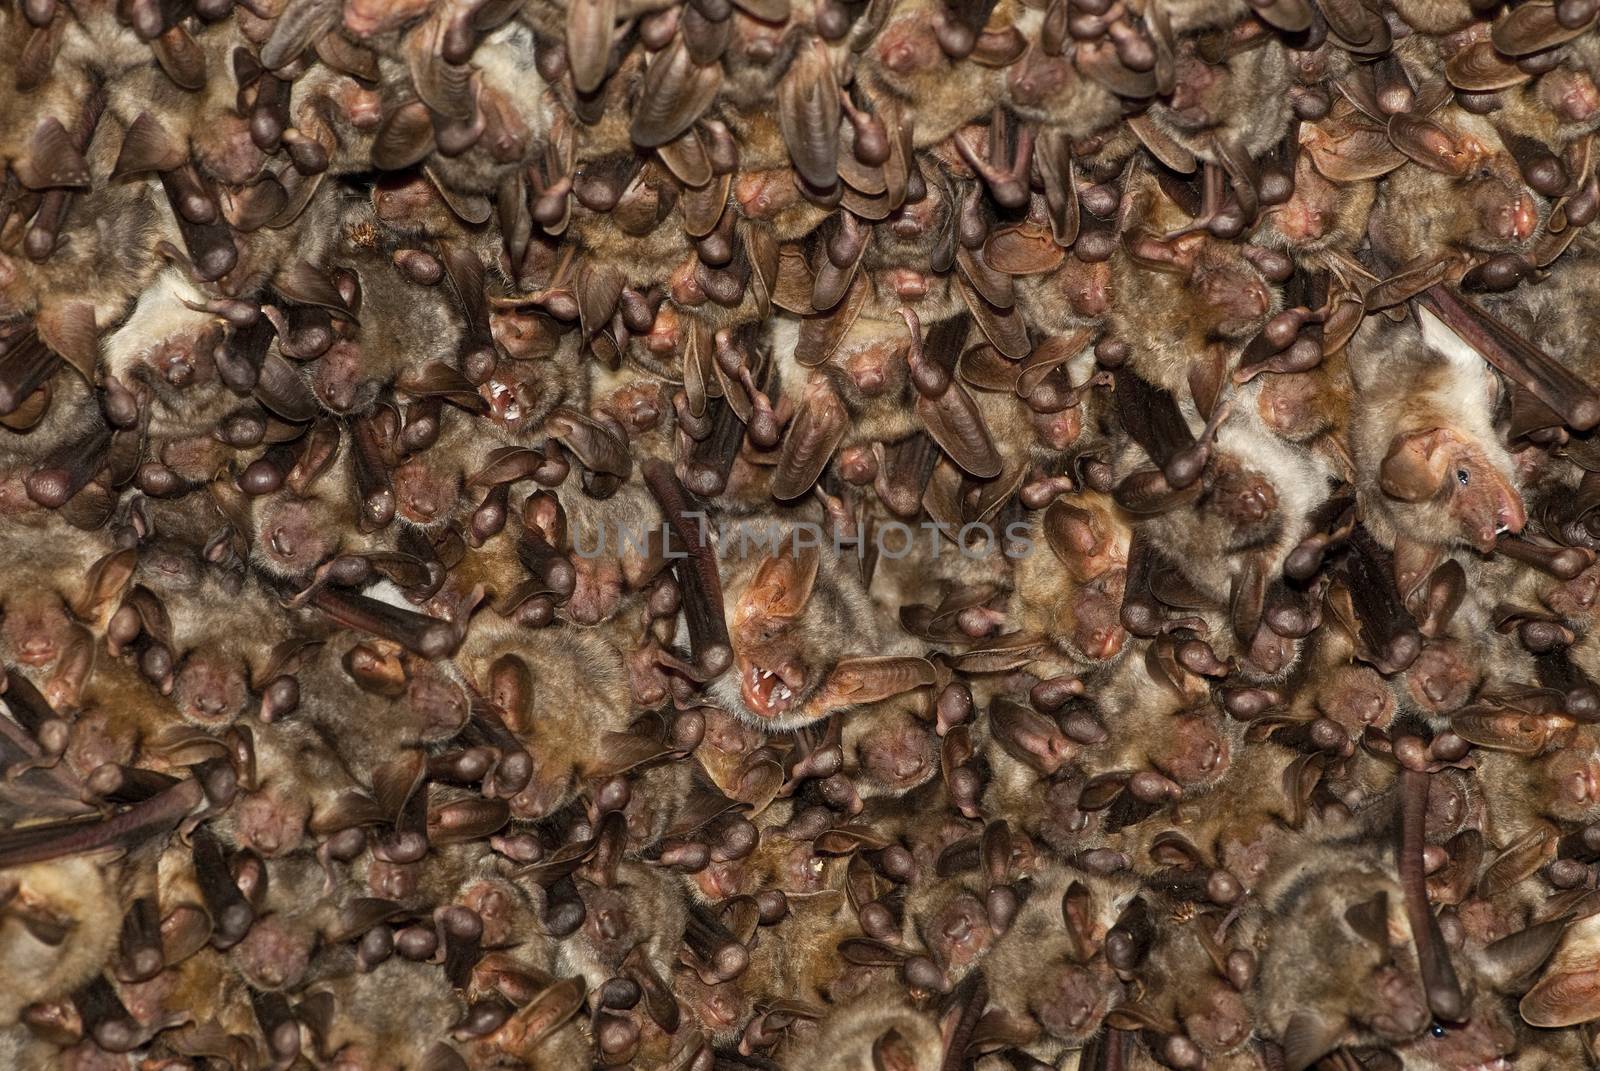 Groups of sleeping bats in cave, Myotis myotis